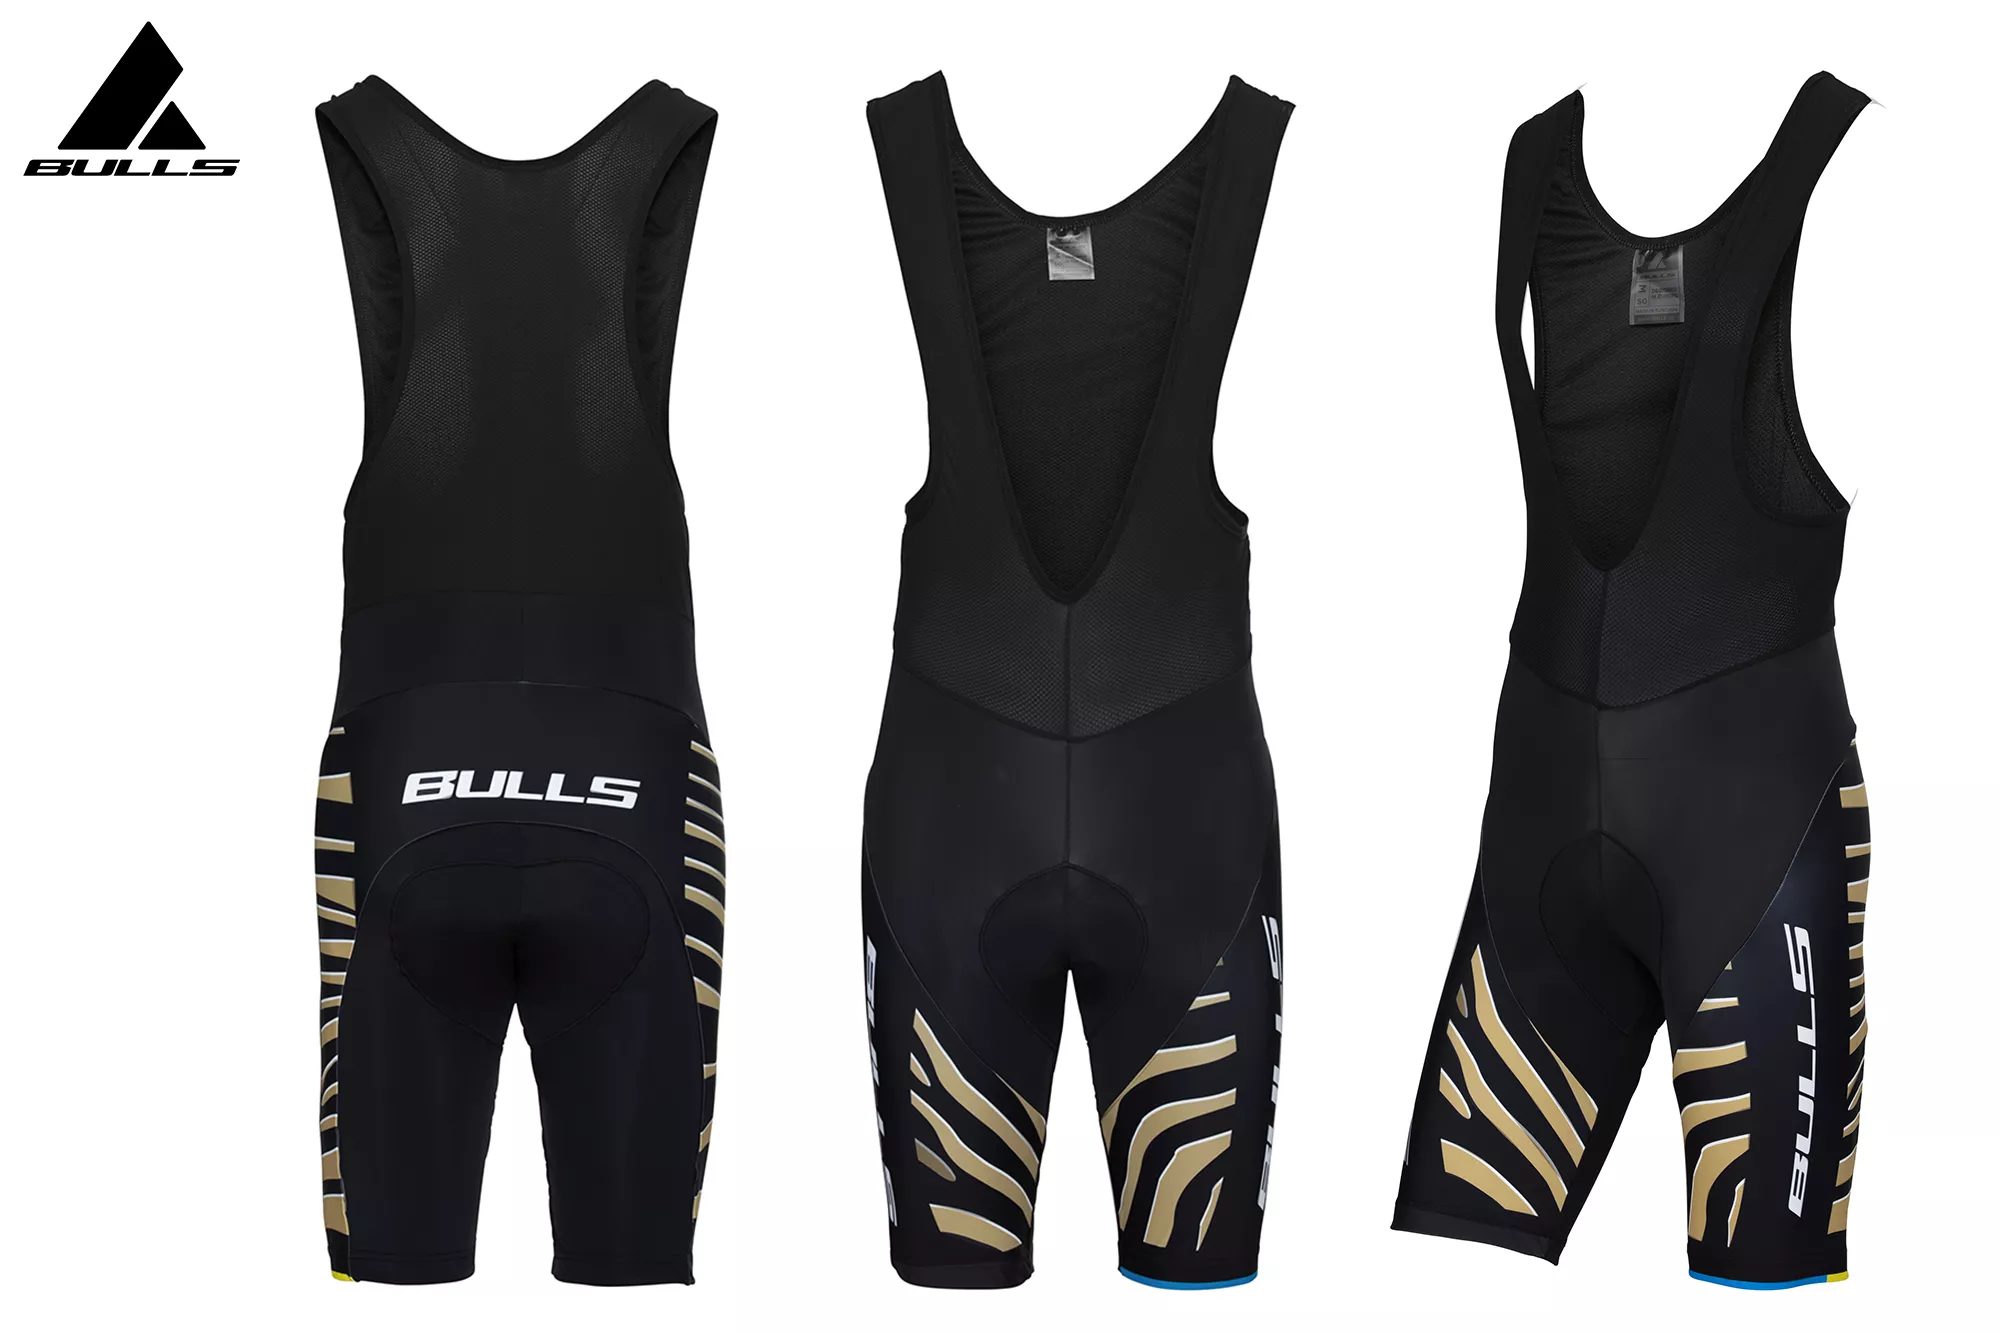 BULLS Team Bib Shorts / Trägerhose - zebra gold 